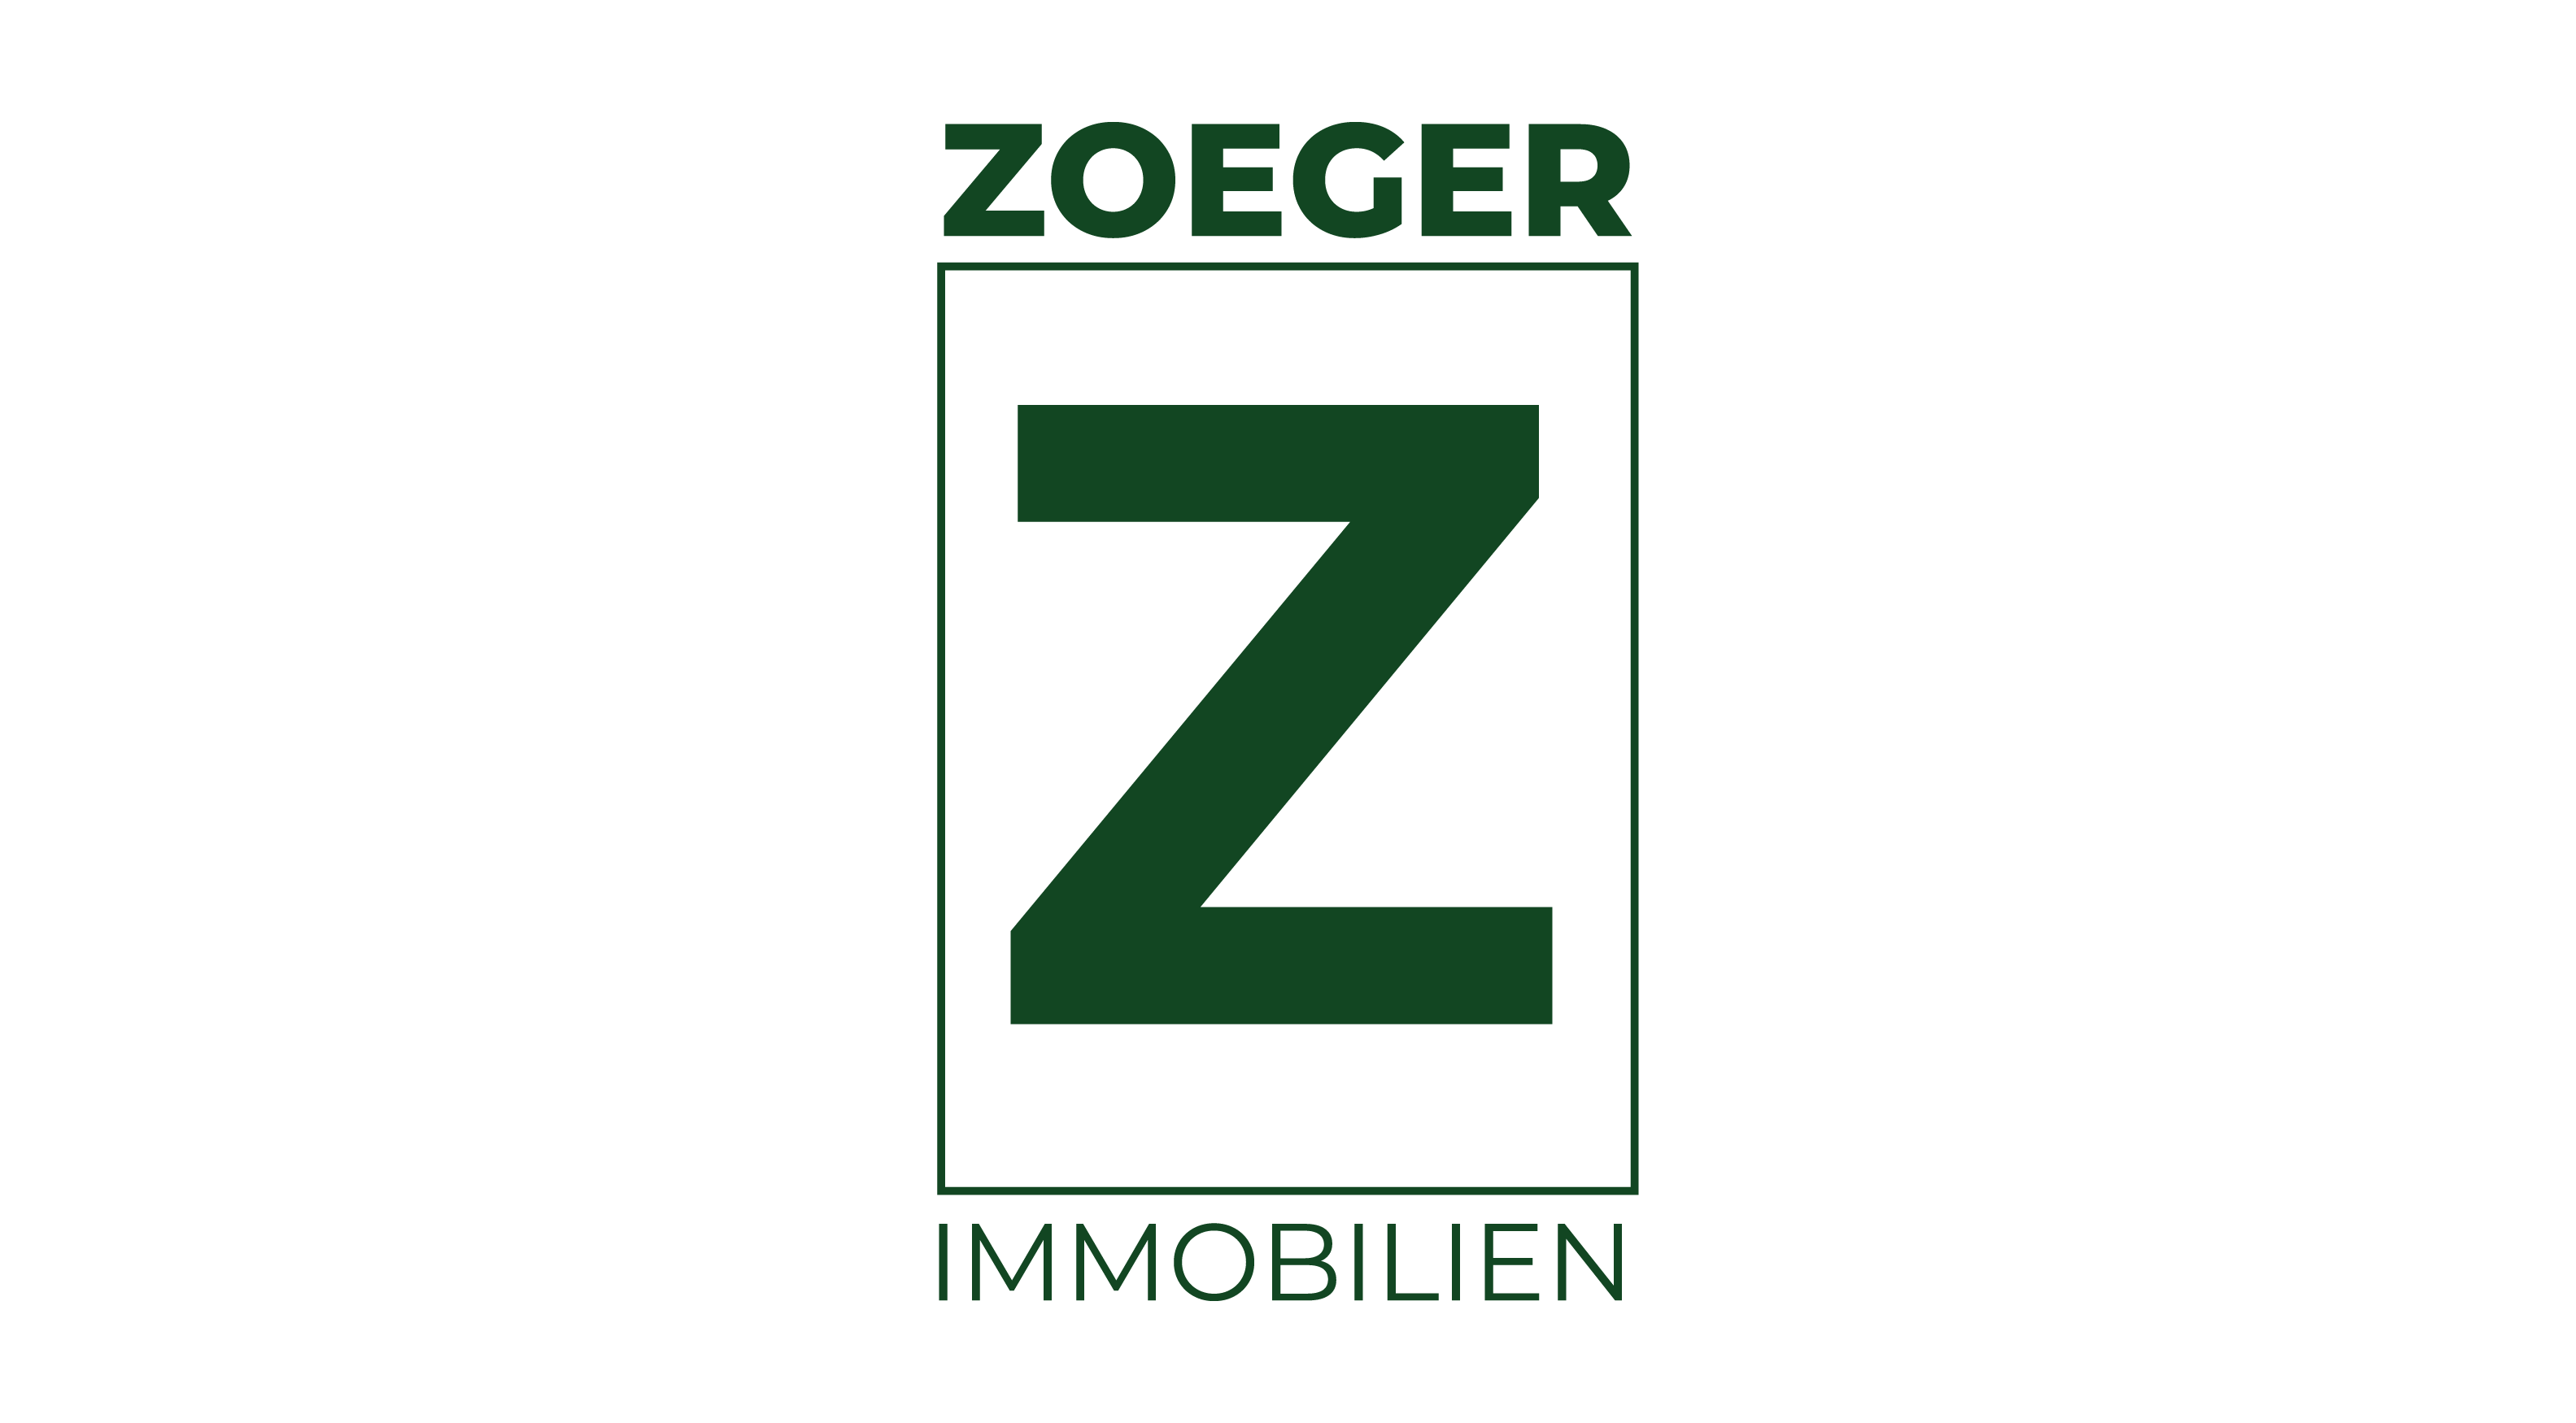 Zoeger